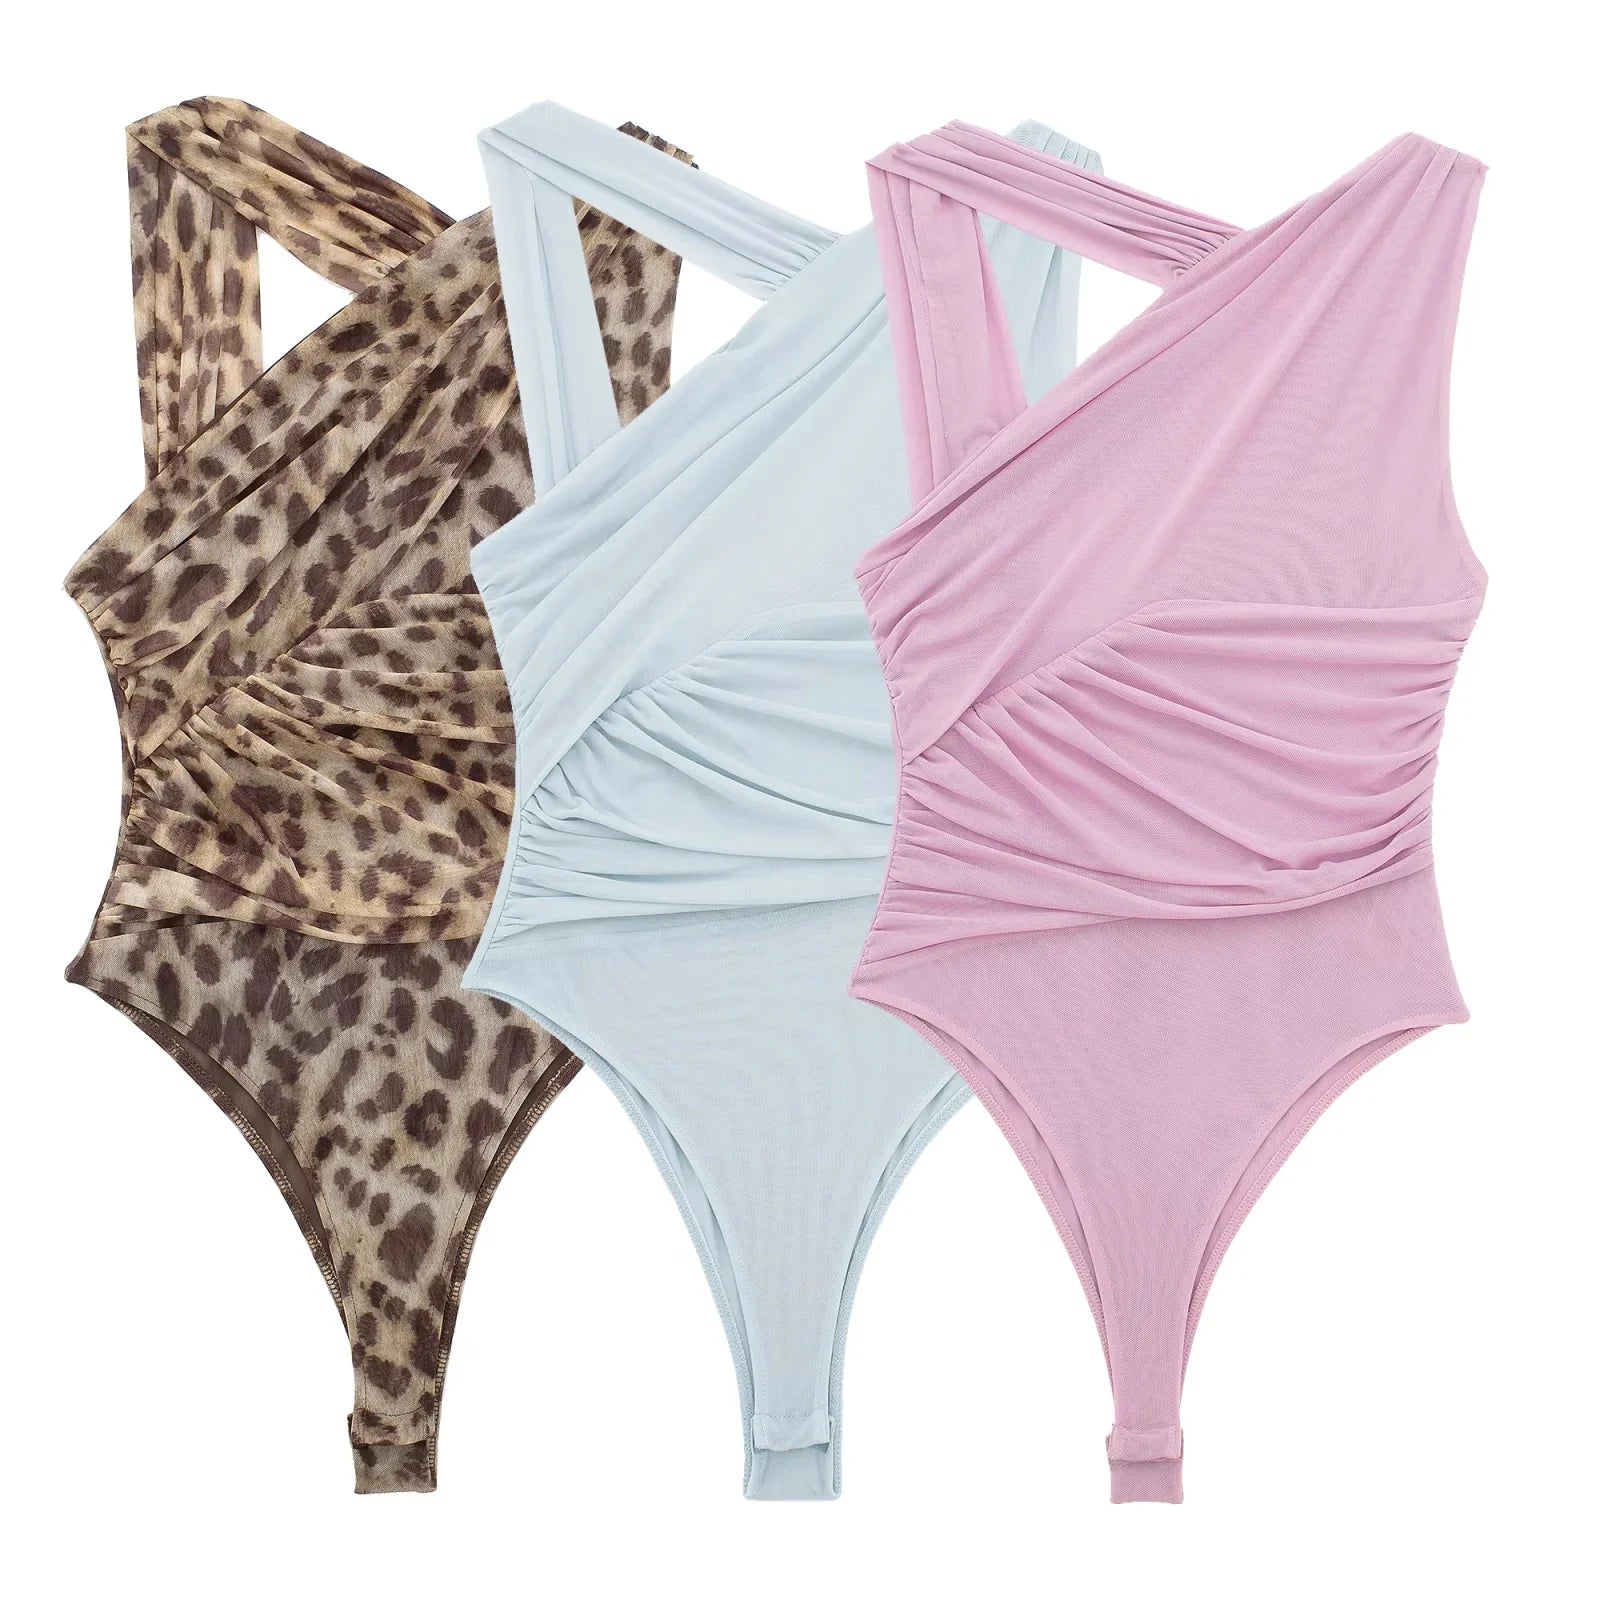 Leopard Print Mesh Bodysuits Women One-Shoulder Backless Jumpsuits Y2K Girl Party Bodysuits